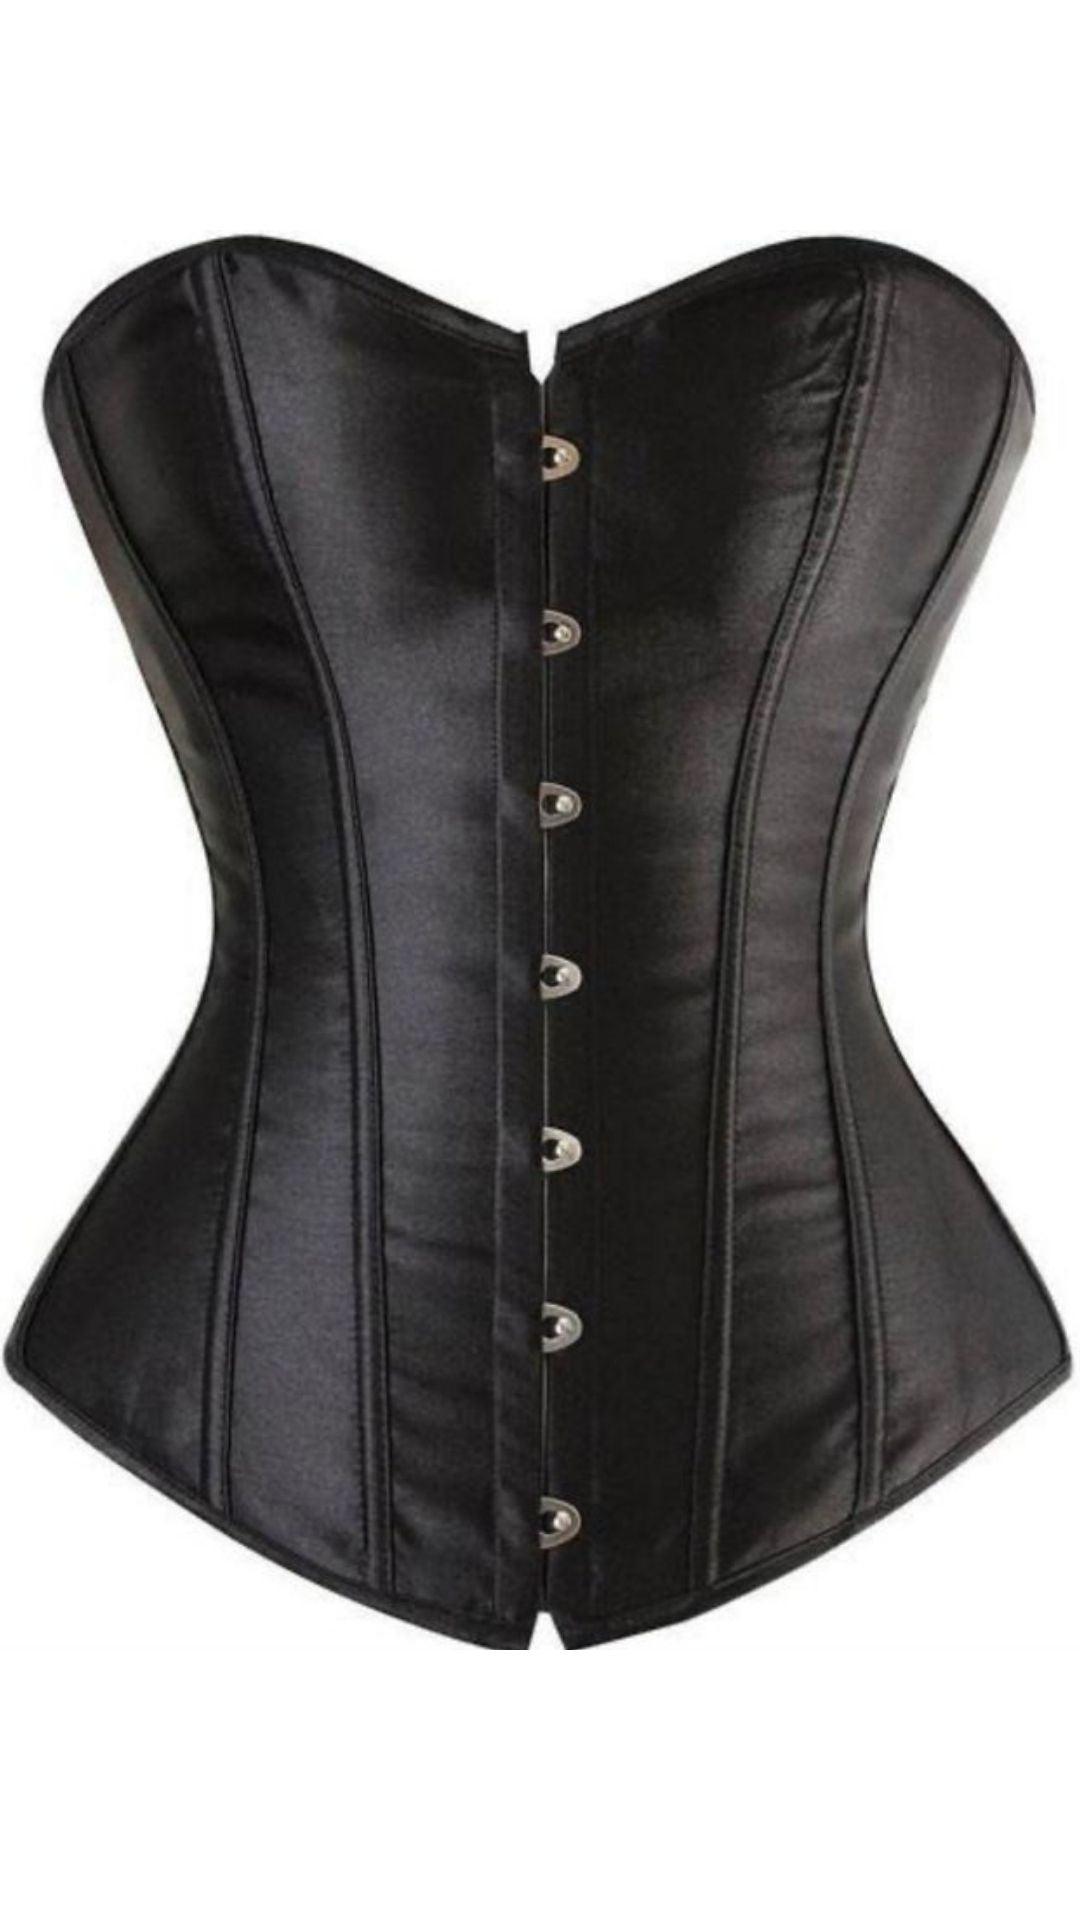 Satin Black corsets - Valour